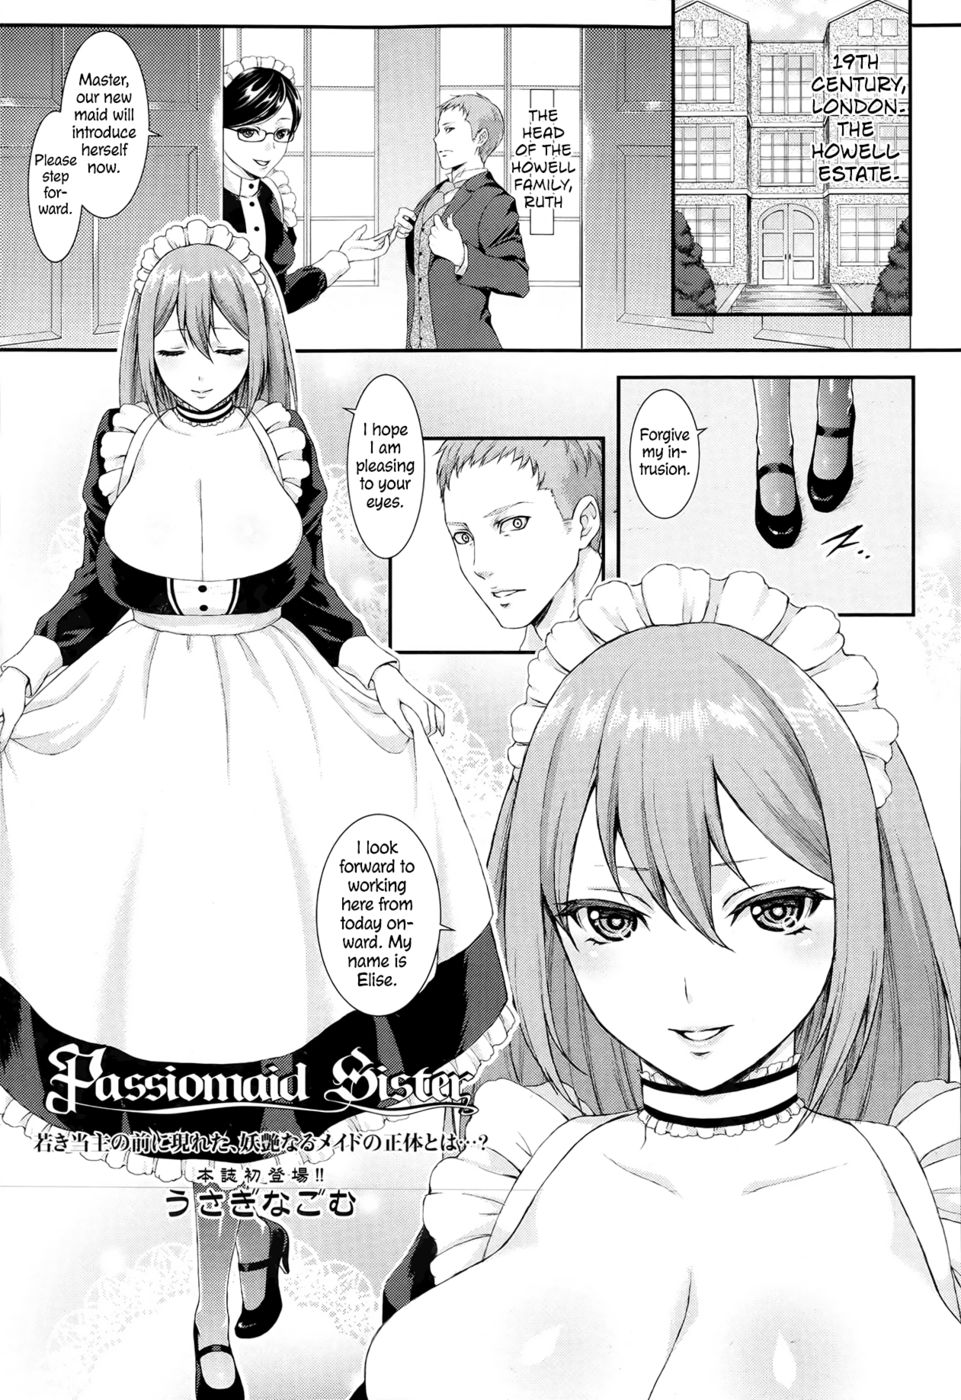 Hentai Manga Comic-Passiomaid Sister-Read-1